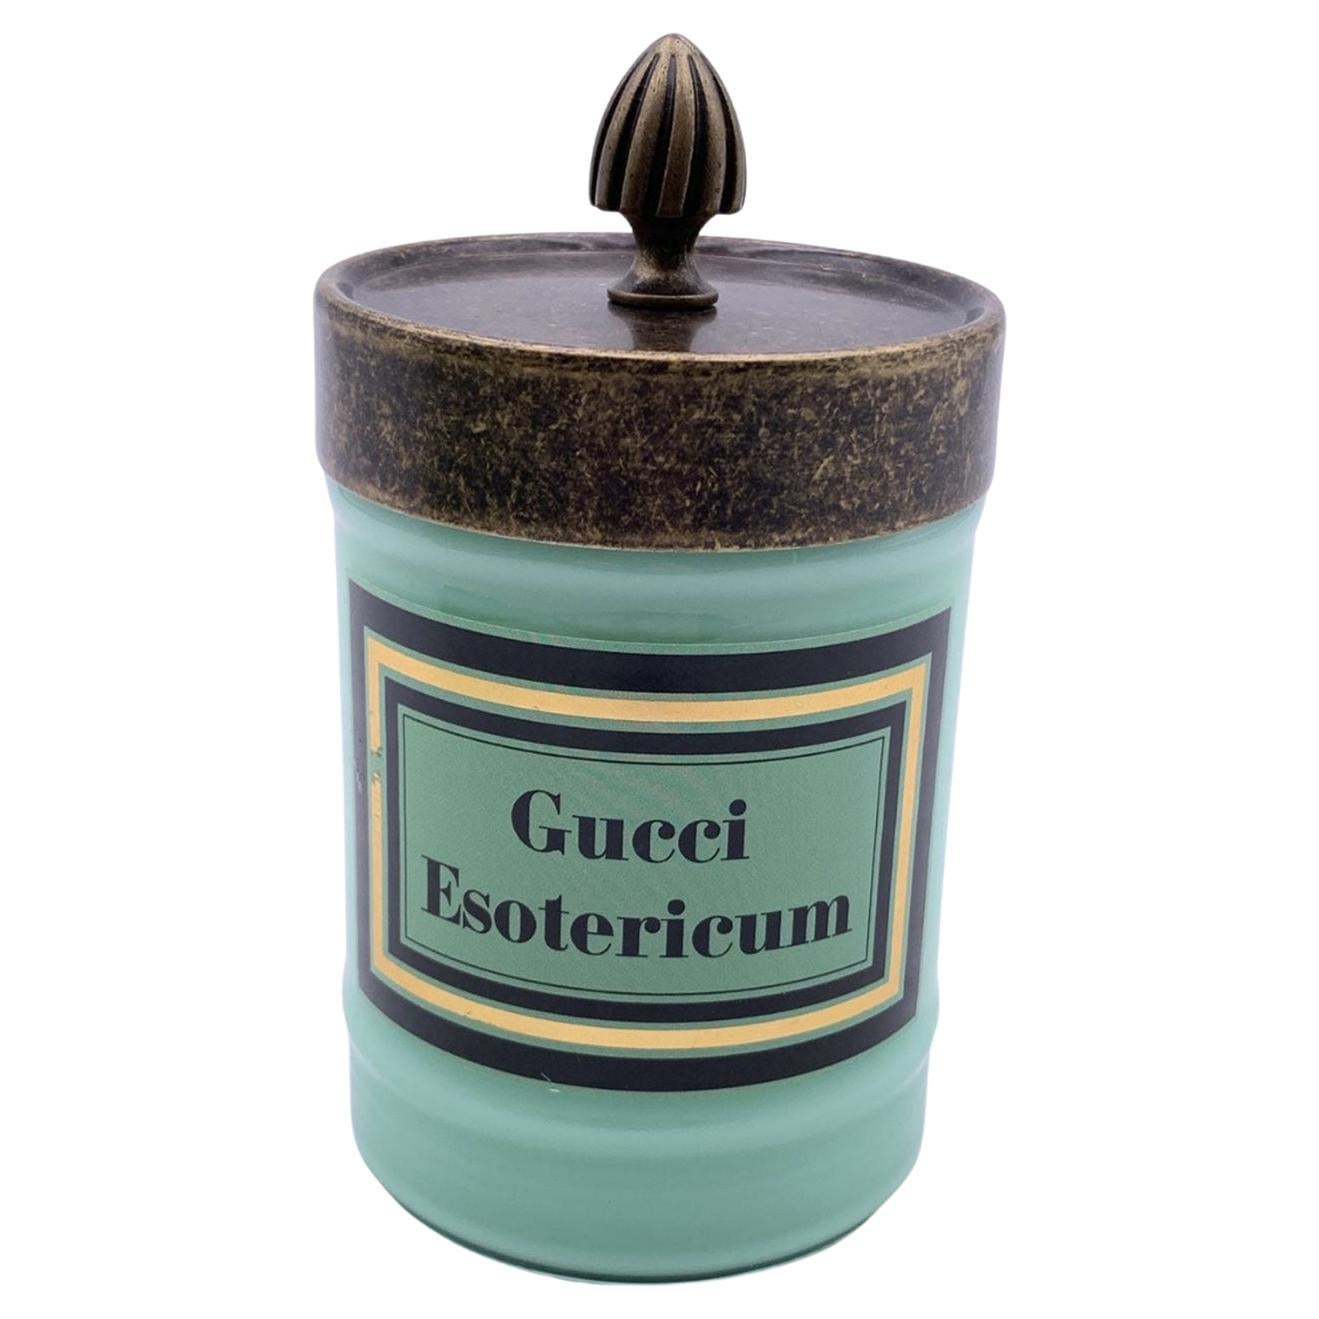 Gucci Esotericum Scented Candle Aqua Green Murano Glass Jar (bougie parfumée) en vente